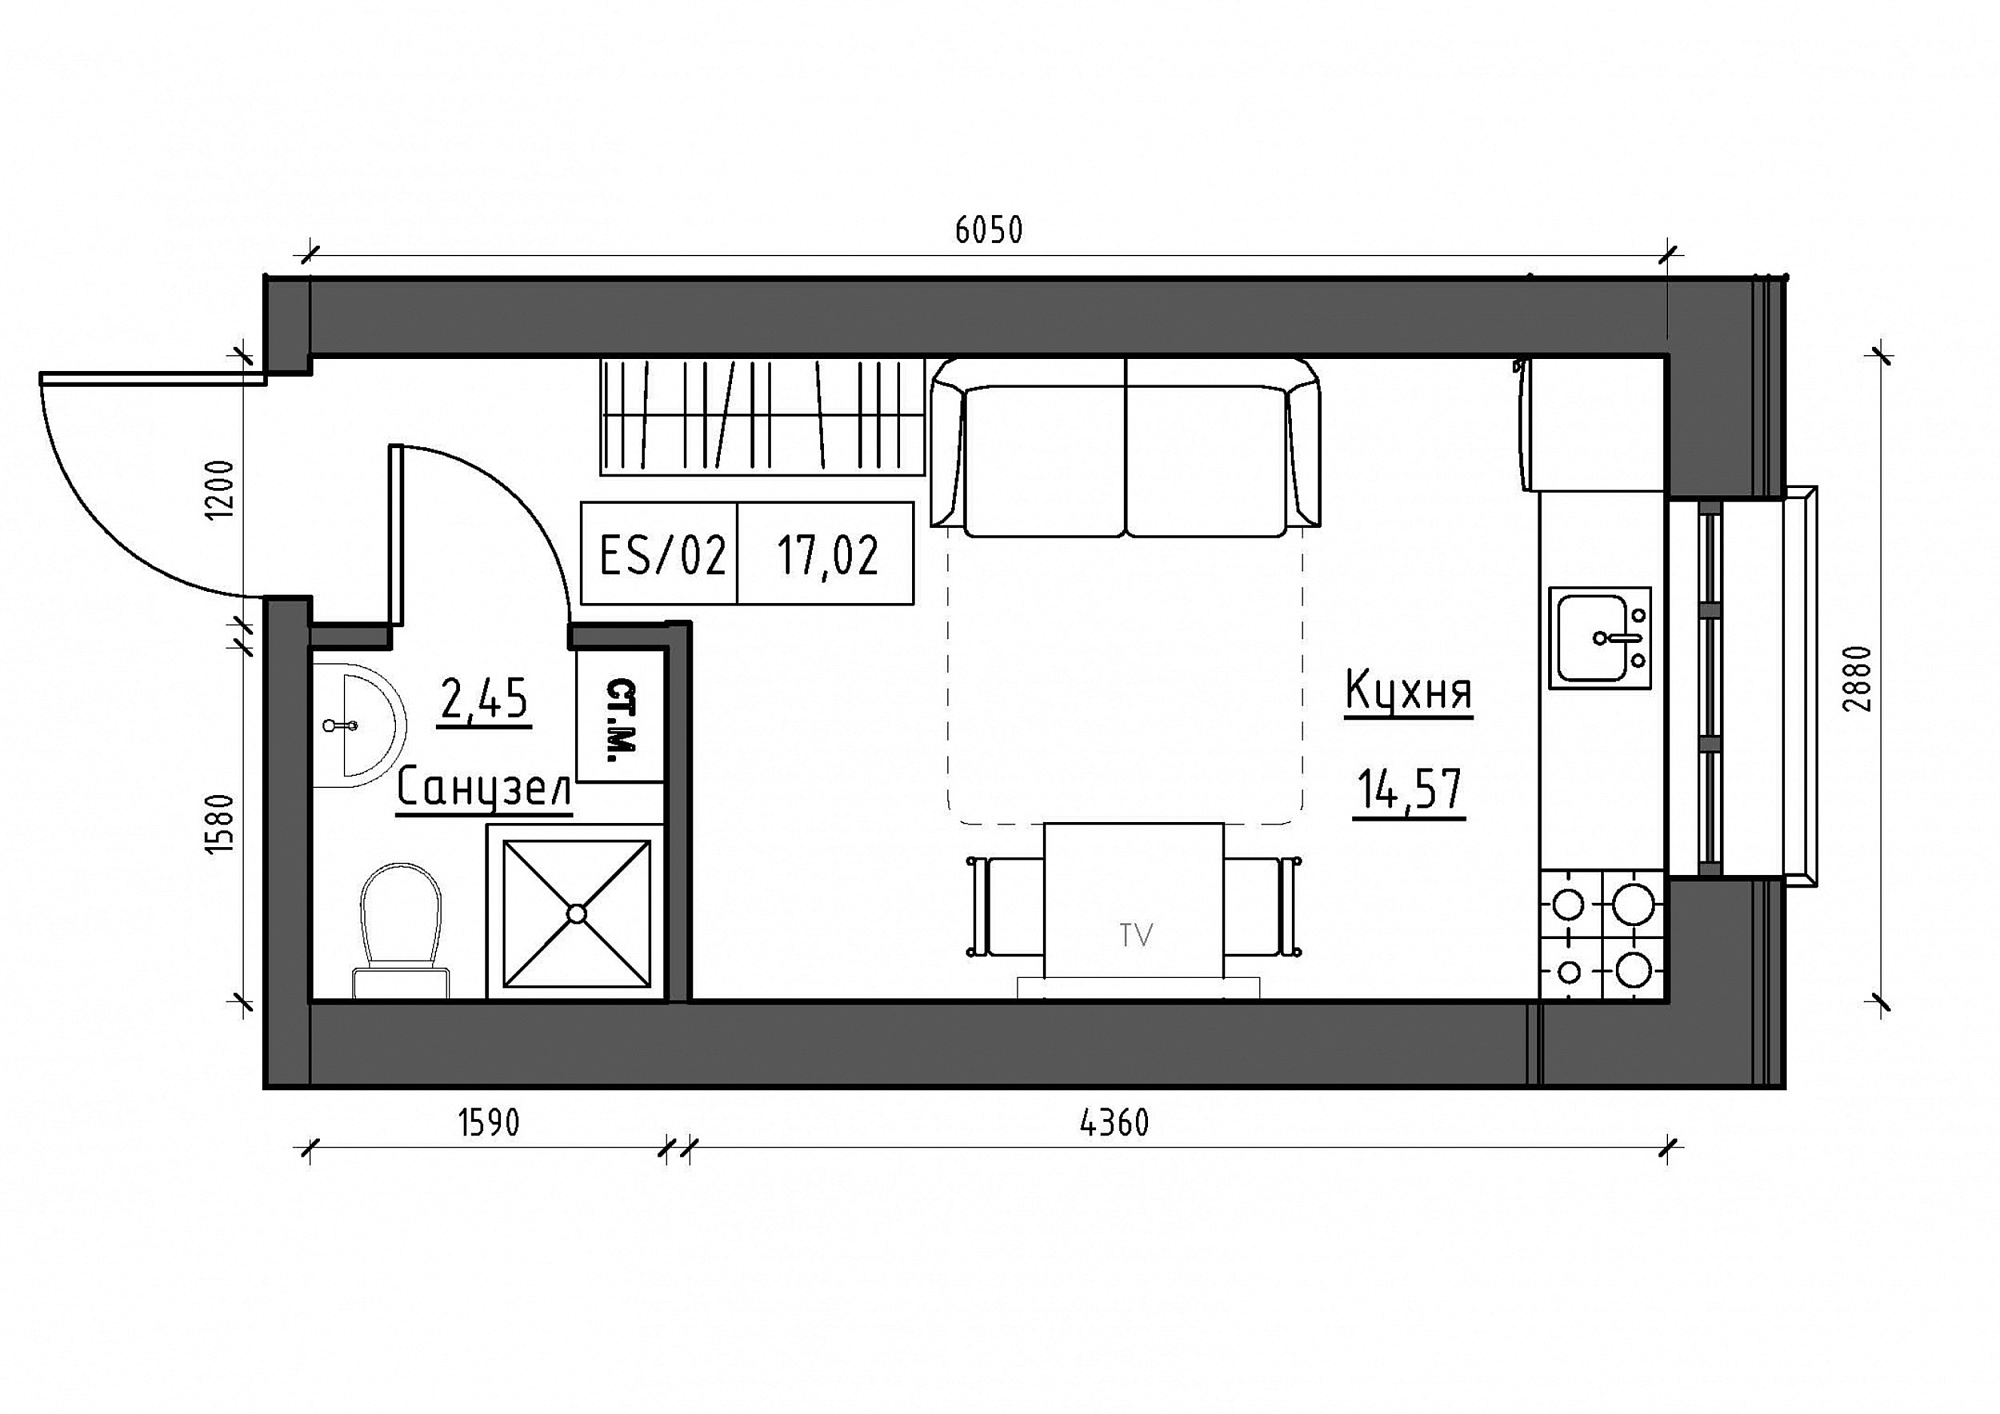 Planning Smart flats area 17.02m2, KS-012-03/0014.